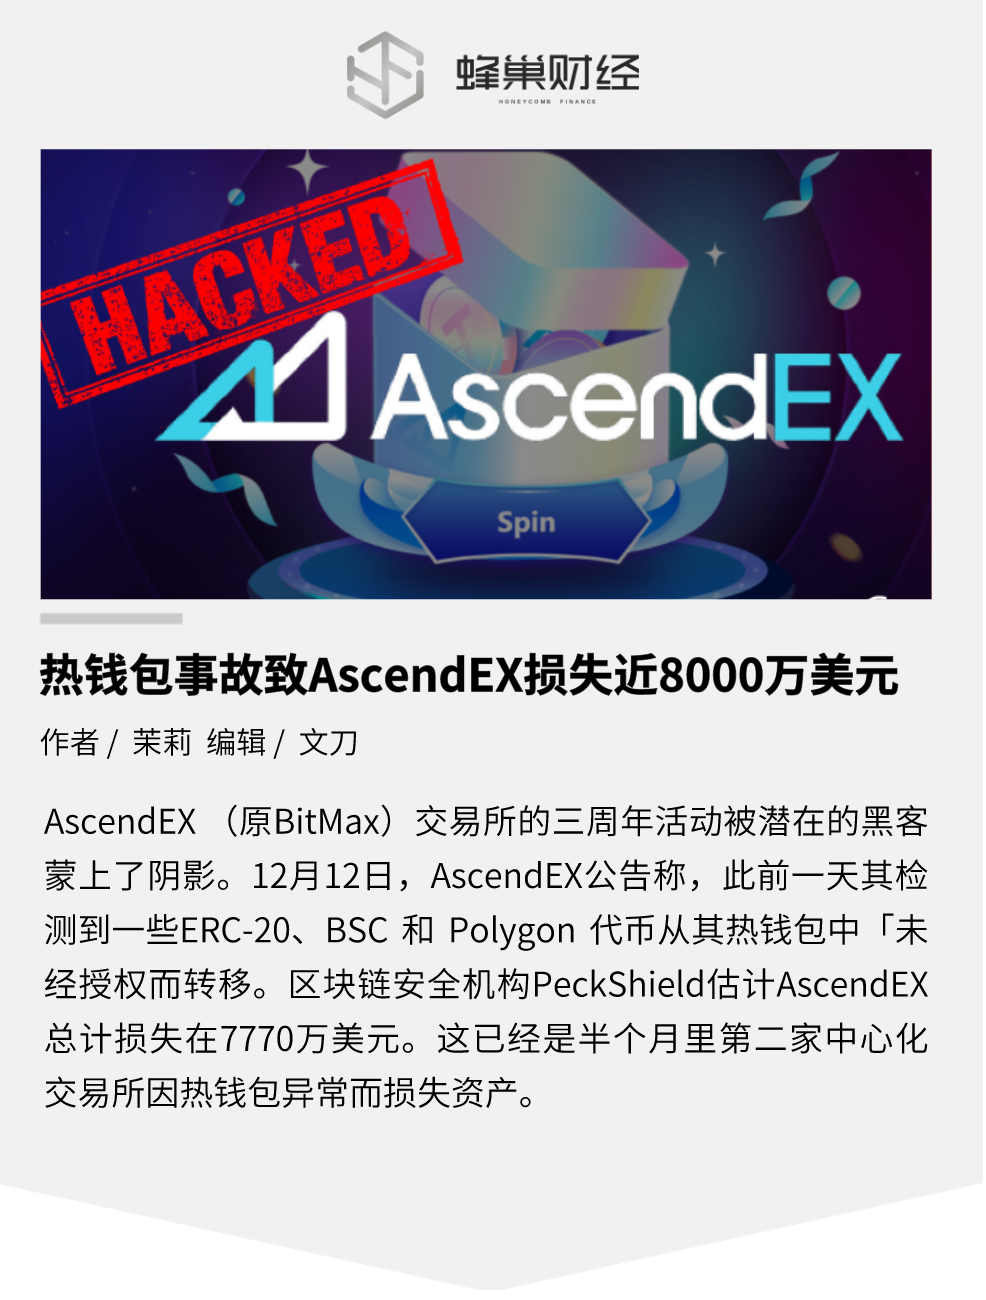 AscendEX 热钱包异常，近 8000 万美元损失超 B 轮融资额